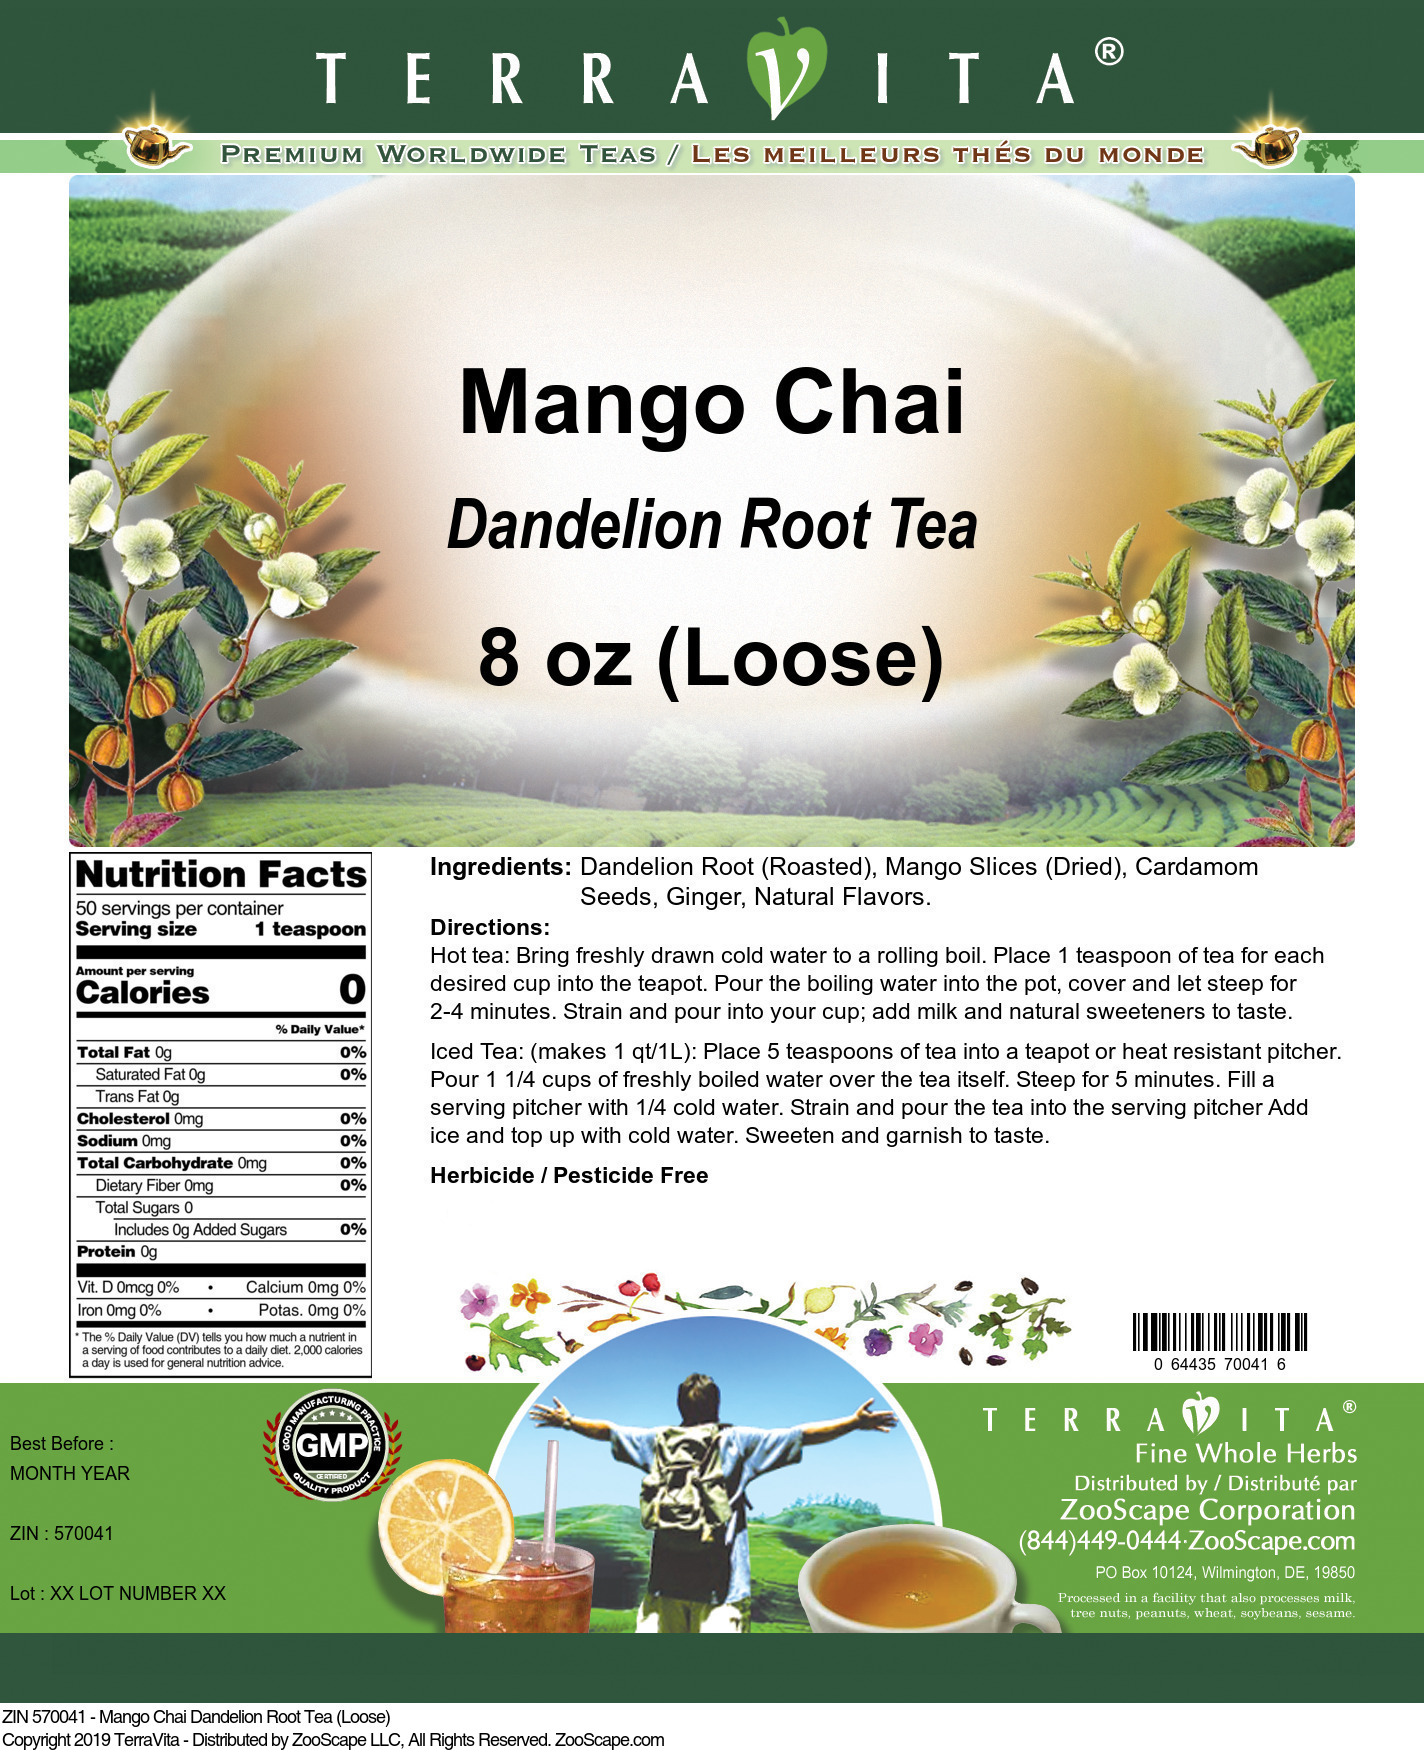 Mango Chai Dandelion Root Tea (Loose) - Label